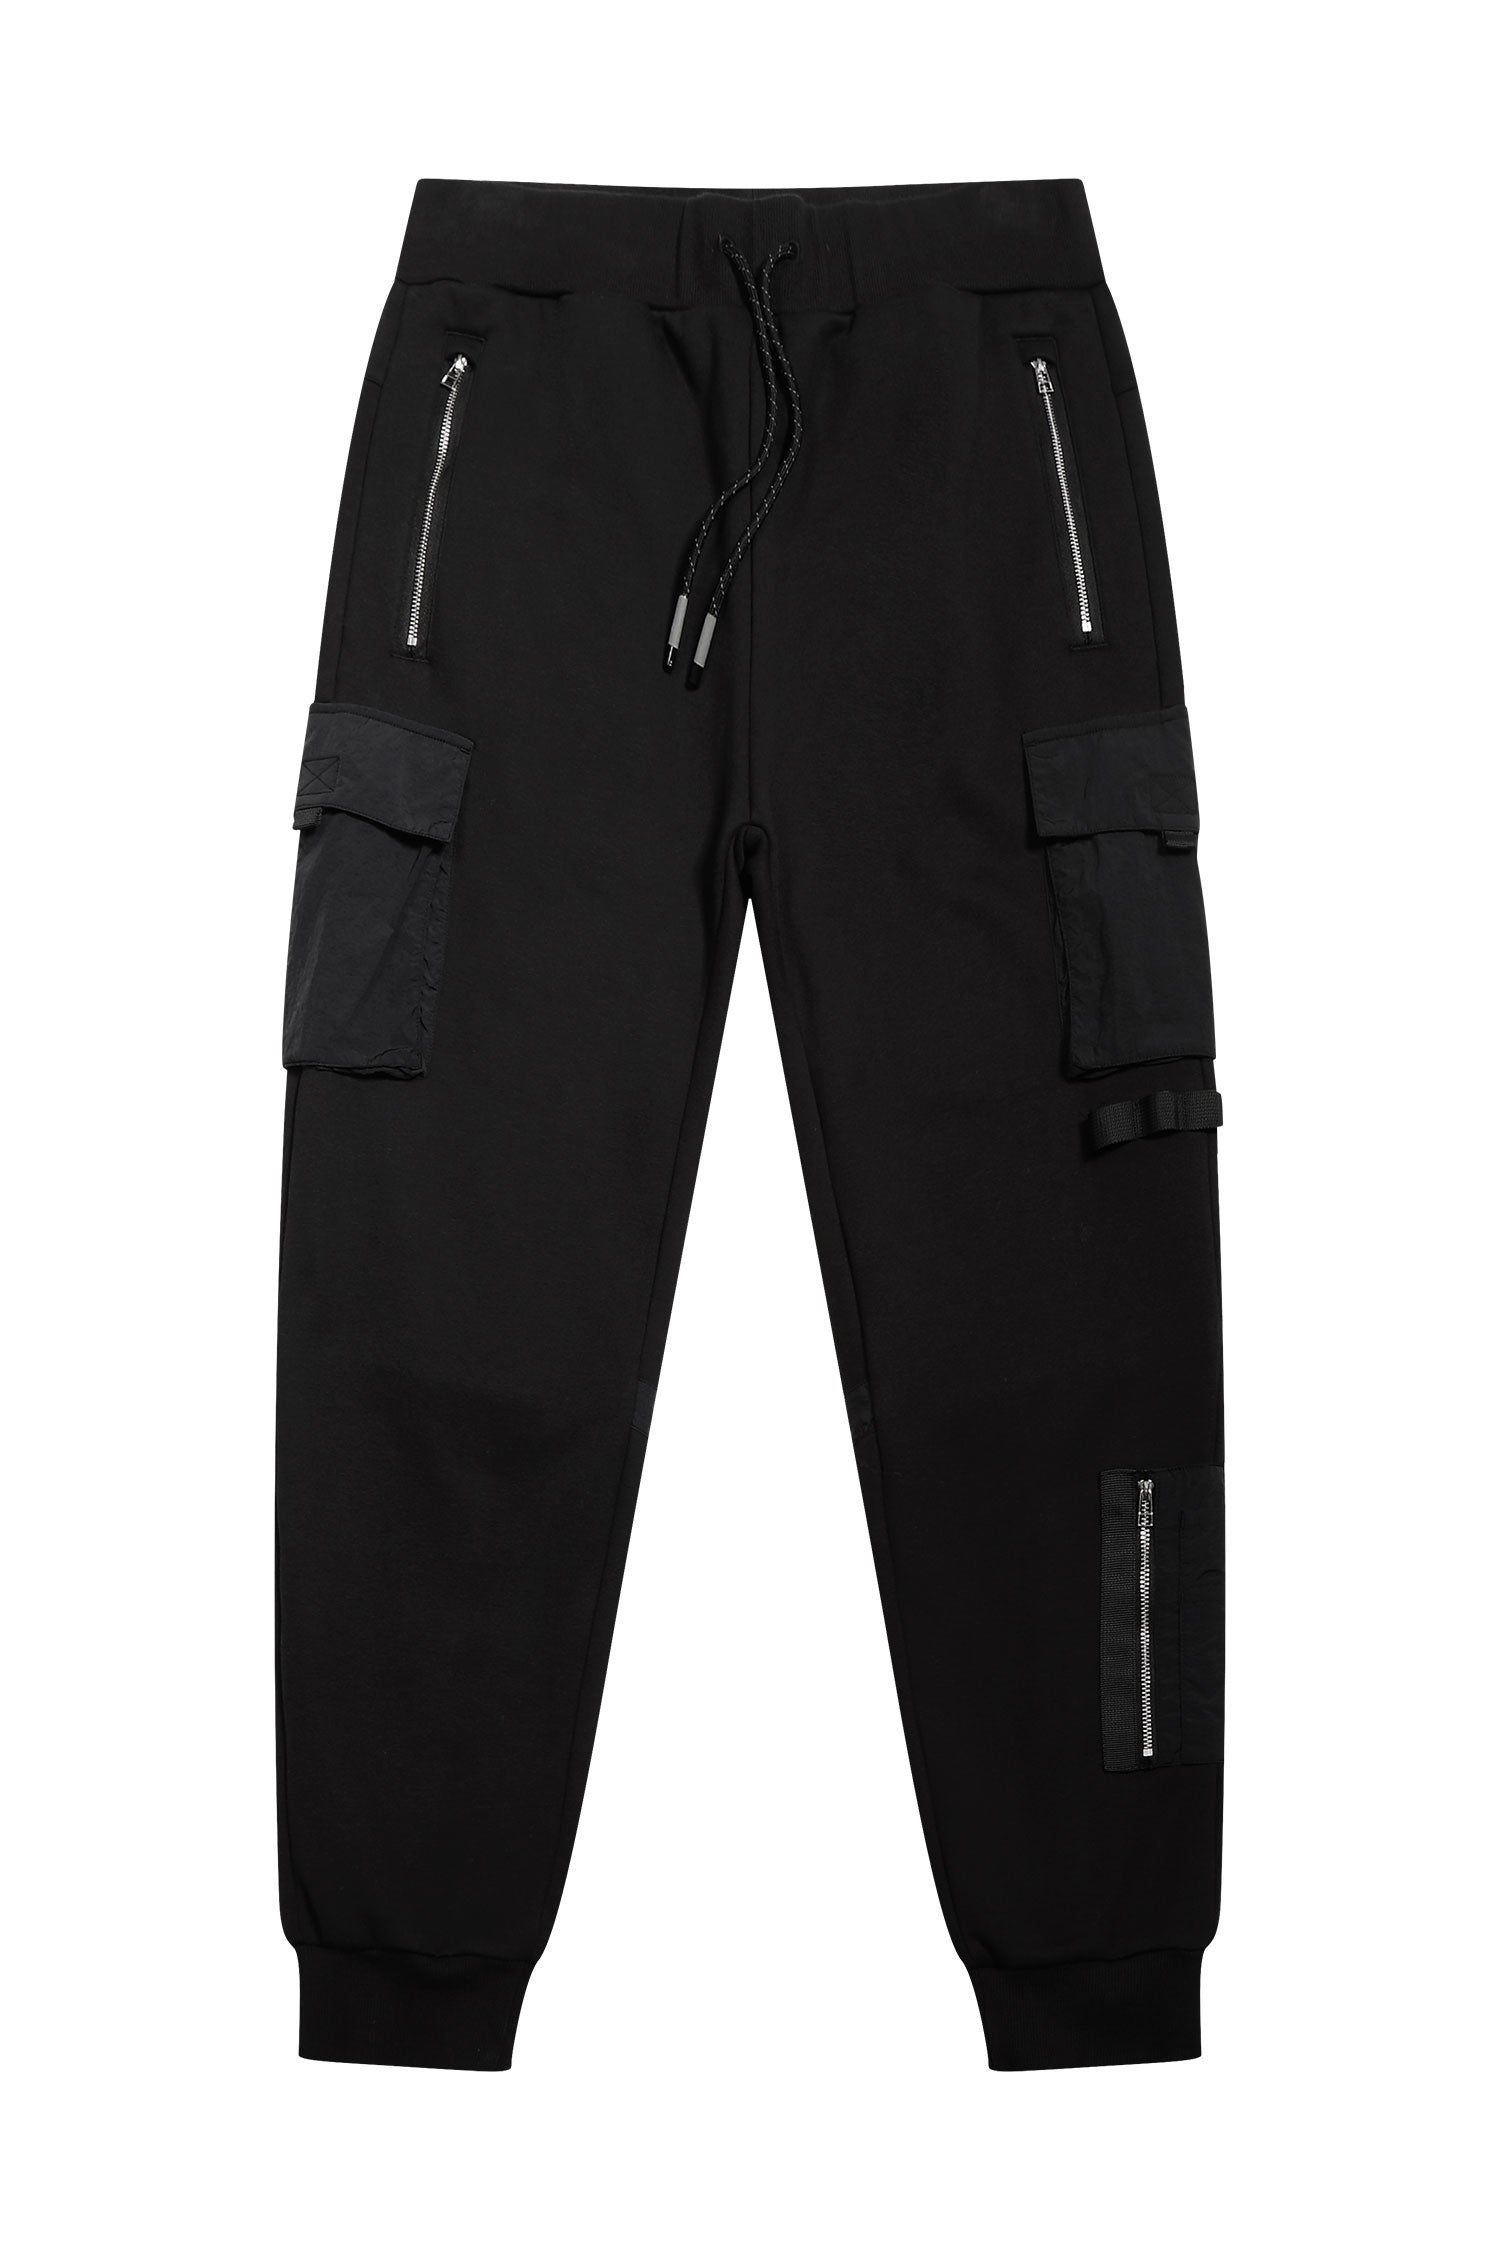 Fashion (D10 Black)Oversized Men Cargo Pants Streetwear Black Mens